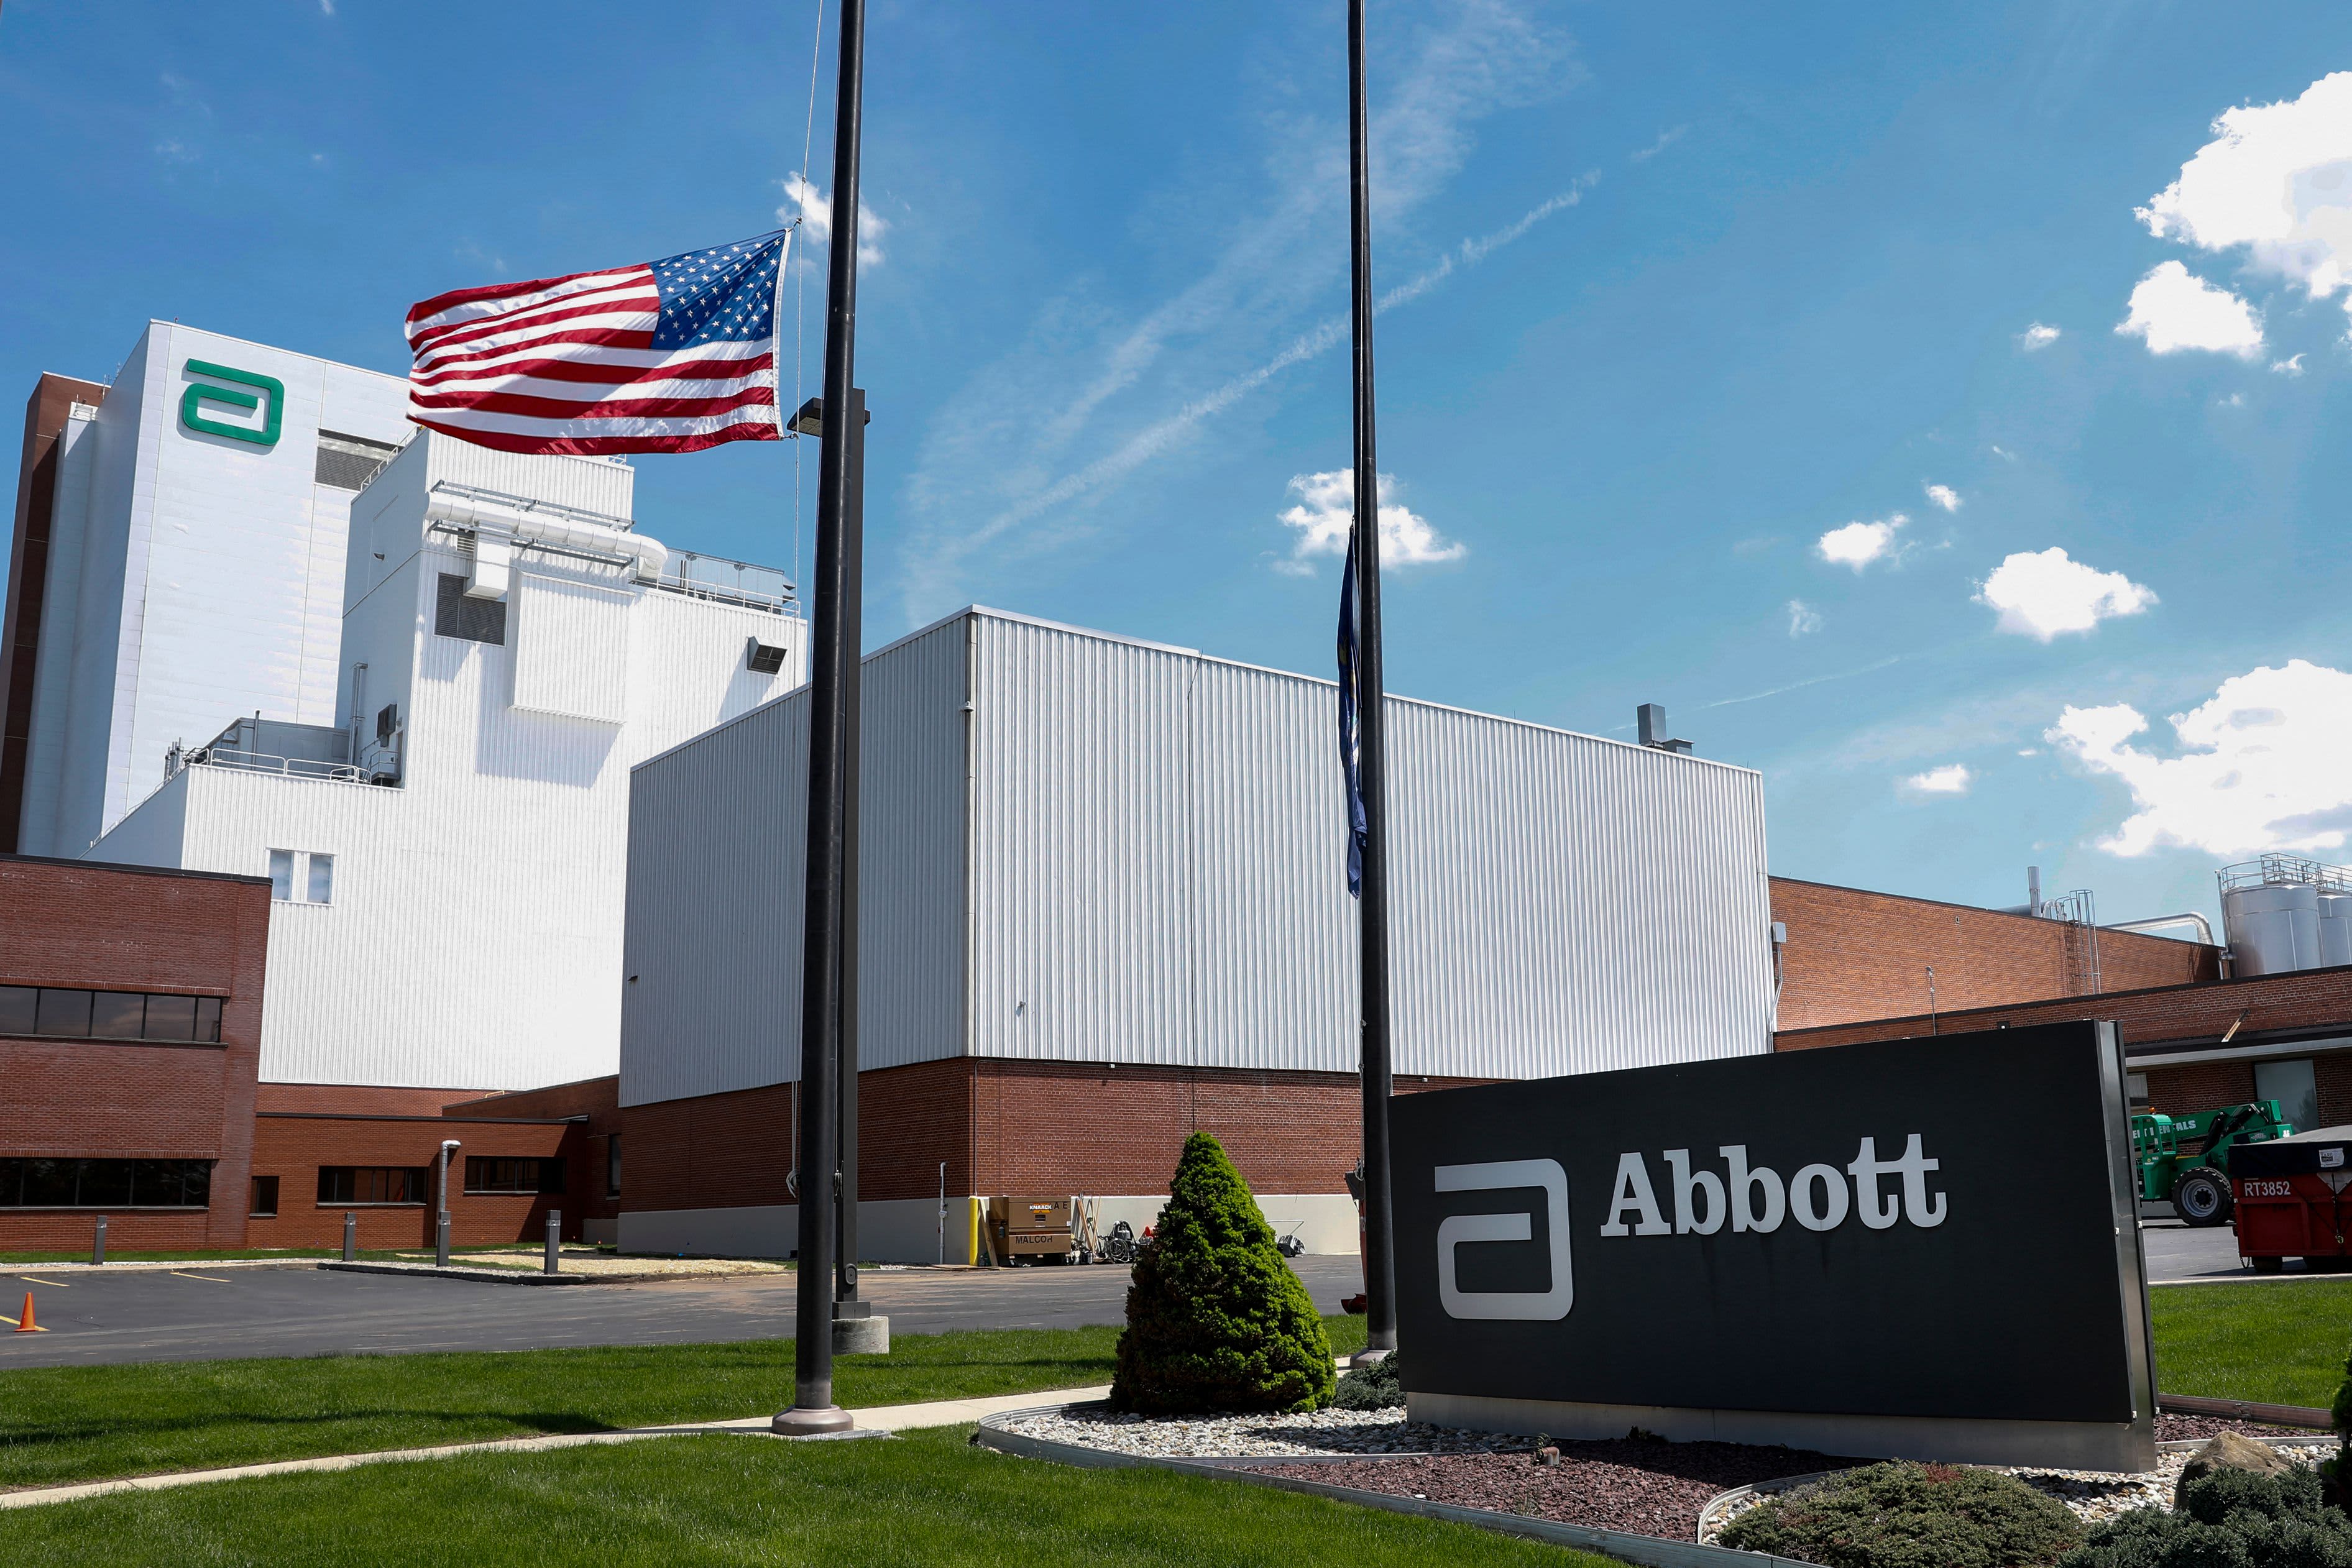 Senate Panel Investigates Abbott Tax Practices After Contamination Shut Down Baby Formula Plant – NBC 5 Dallas-Fort Worth